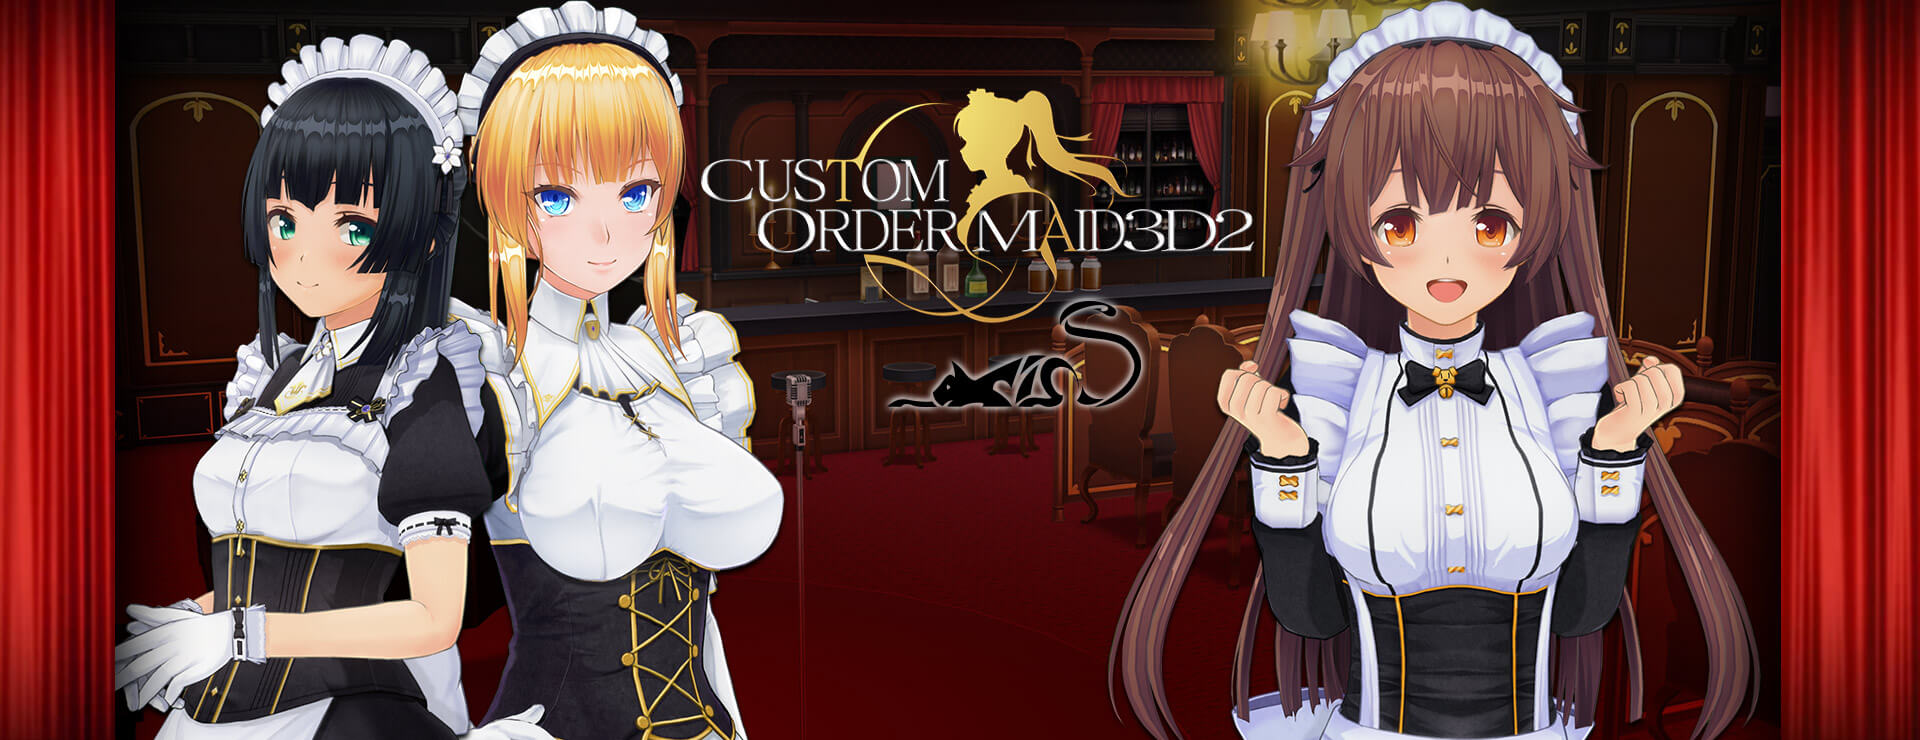 Custom Order Maid 3D2 GP 01 (DLC) - Action Aventure Jeu